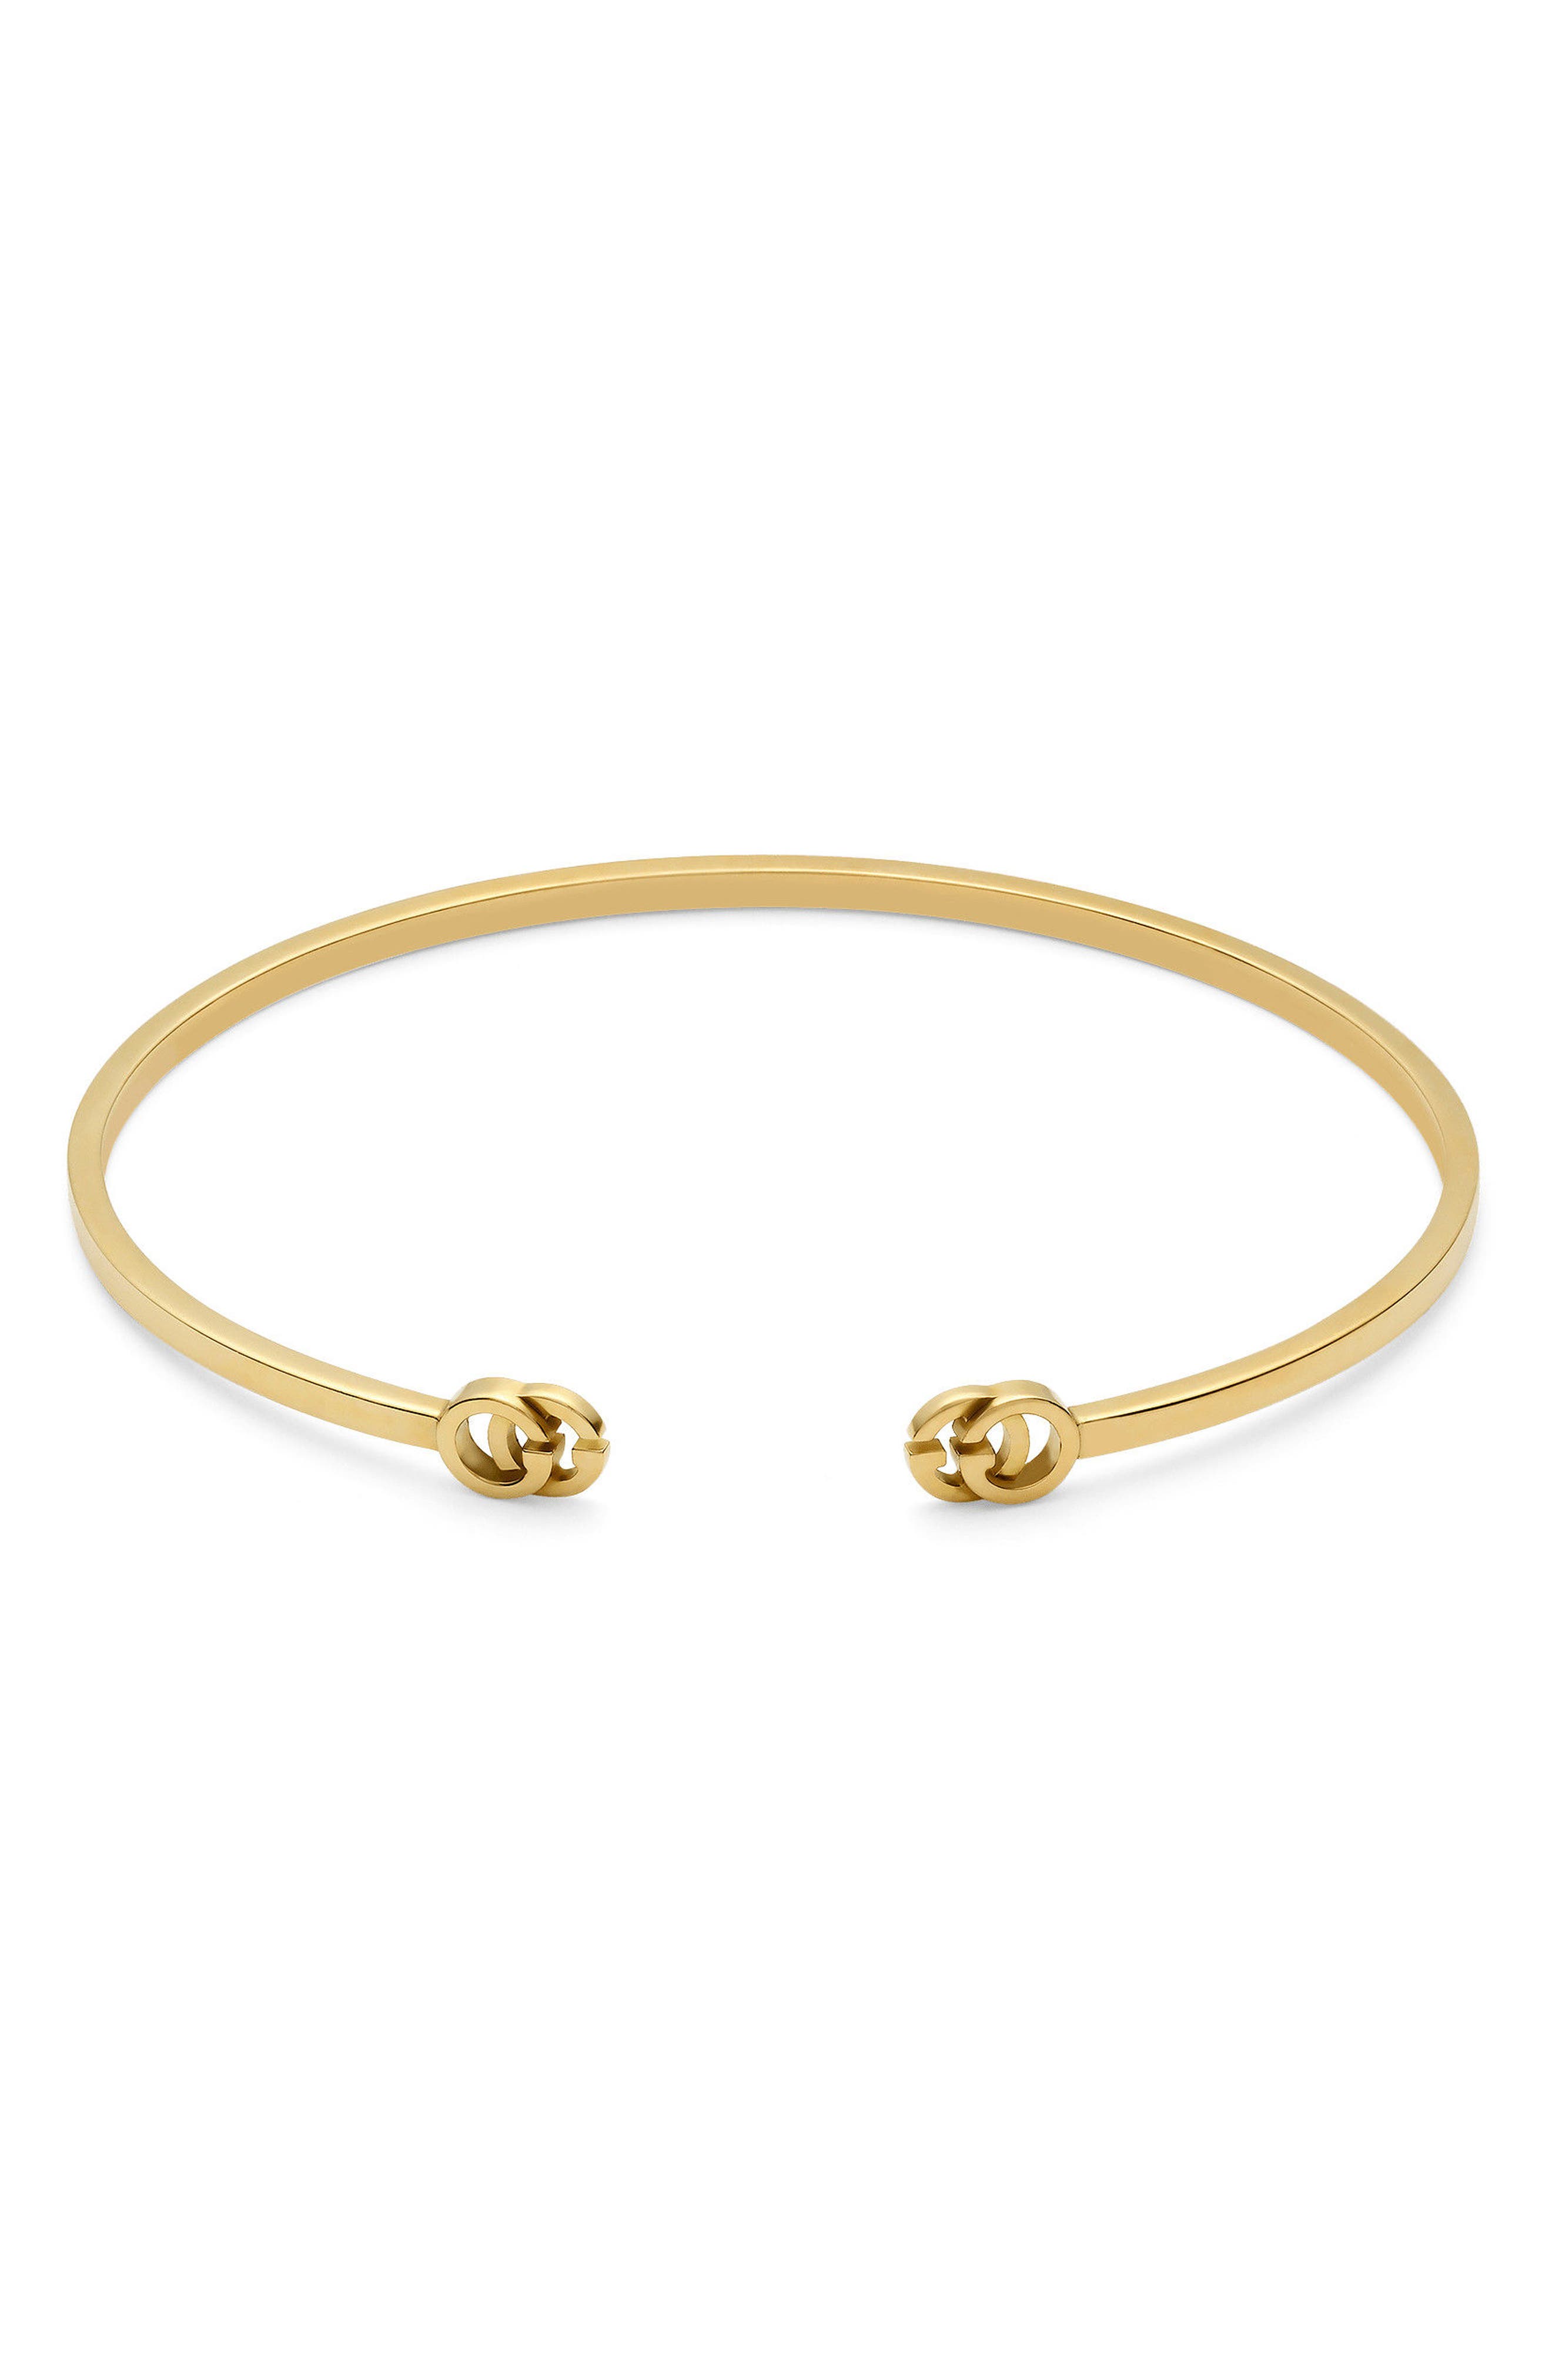 gucci gold bracelet womens